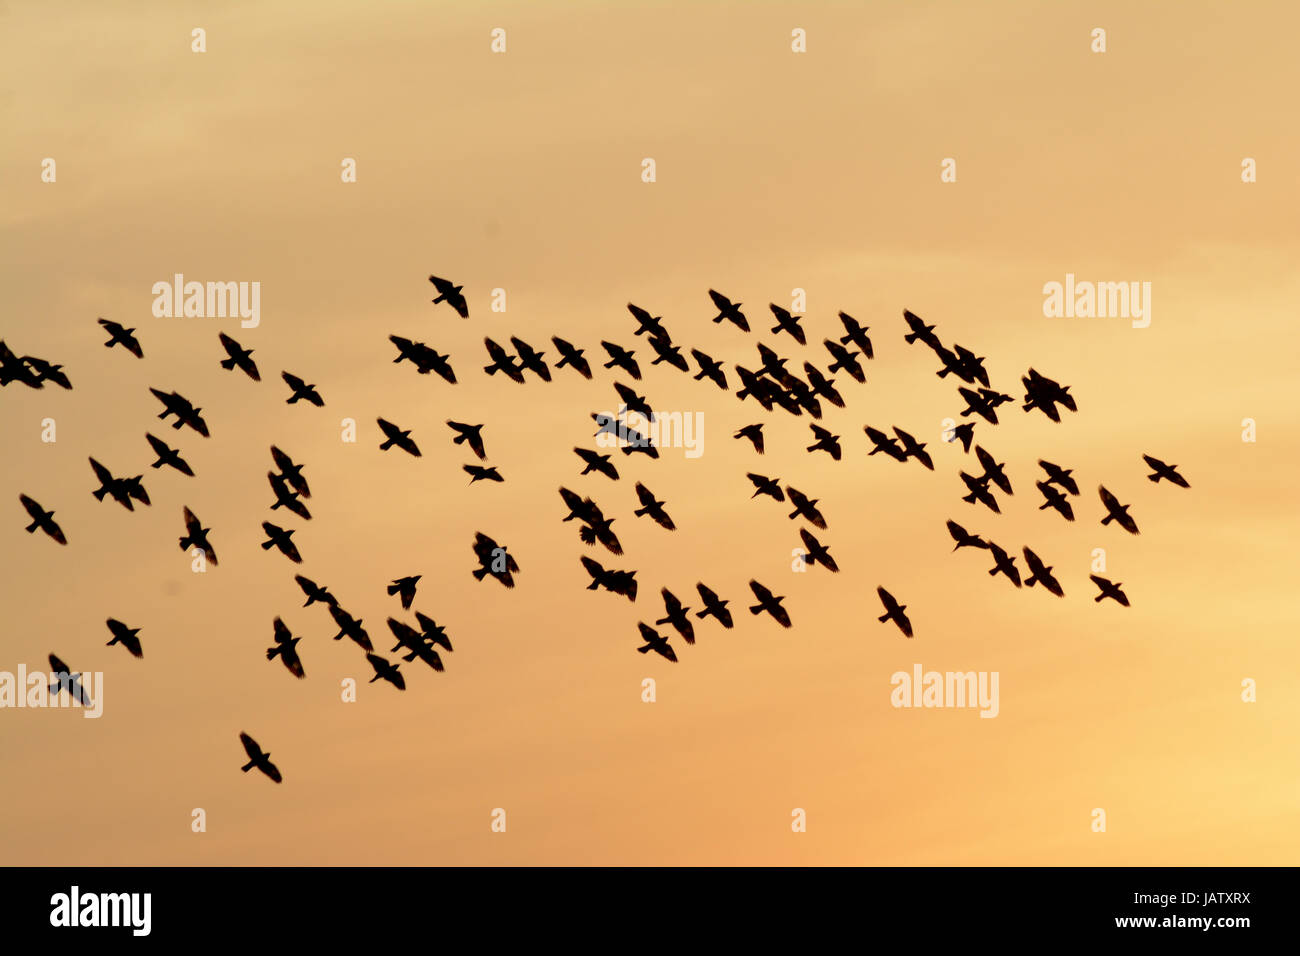 FLOCKING BEHAVIOR IN BIRDS IN EVENING Stock Photo